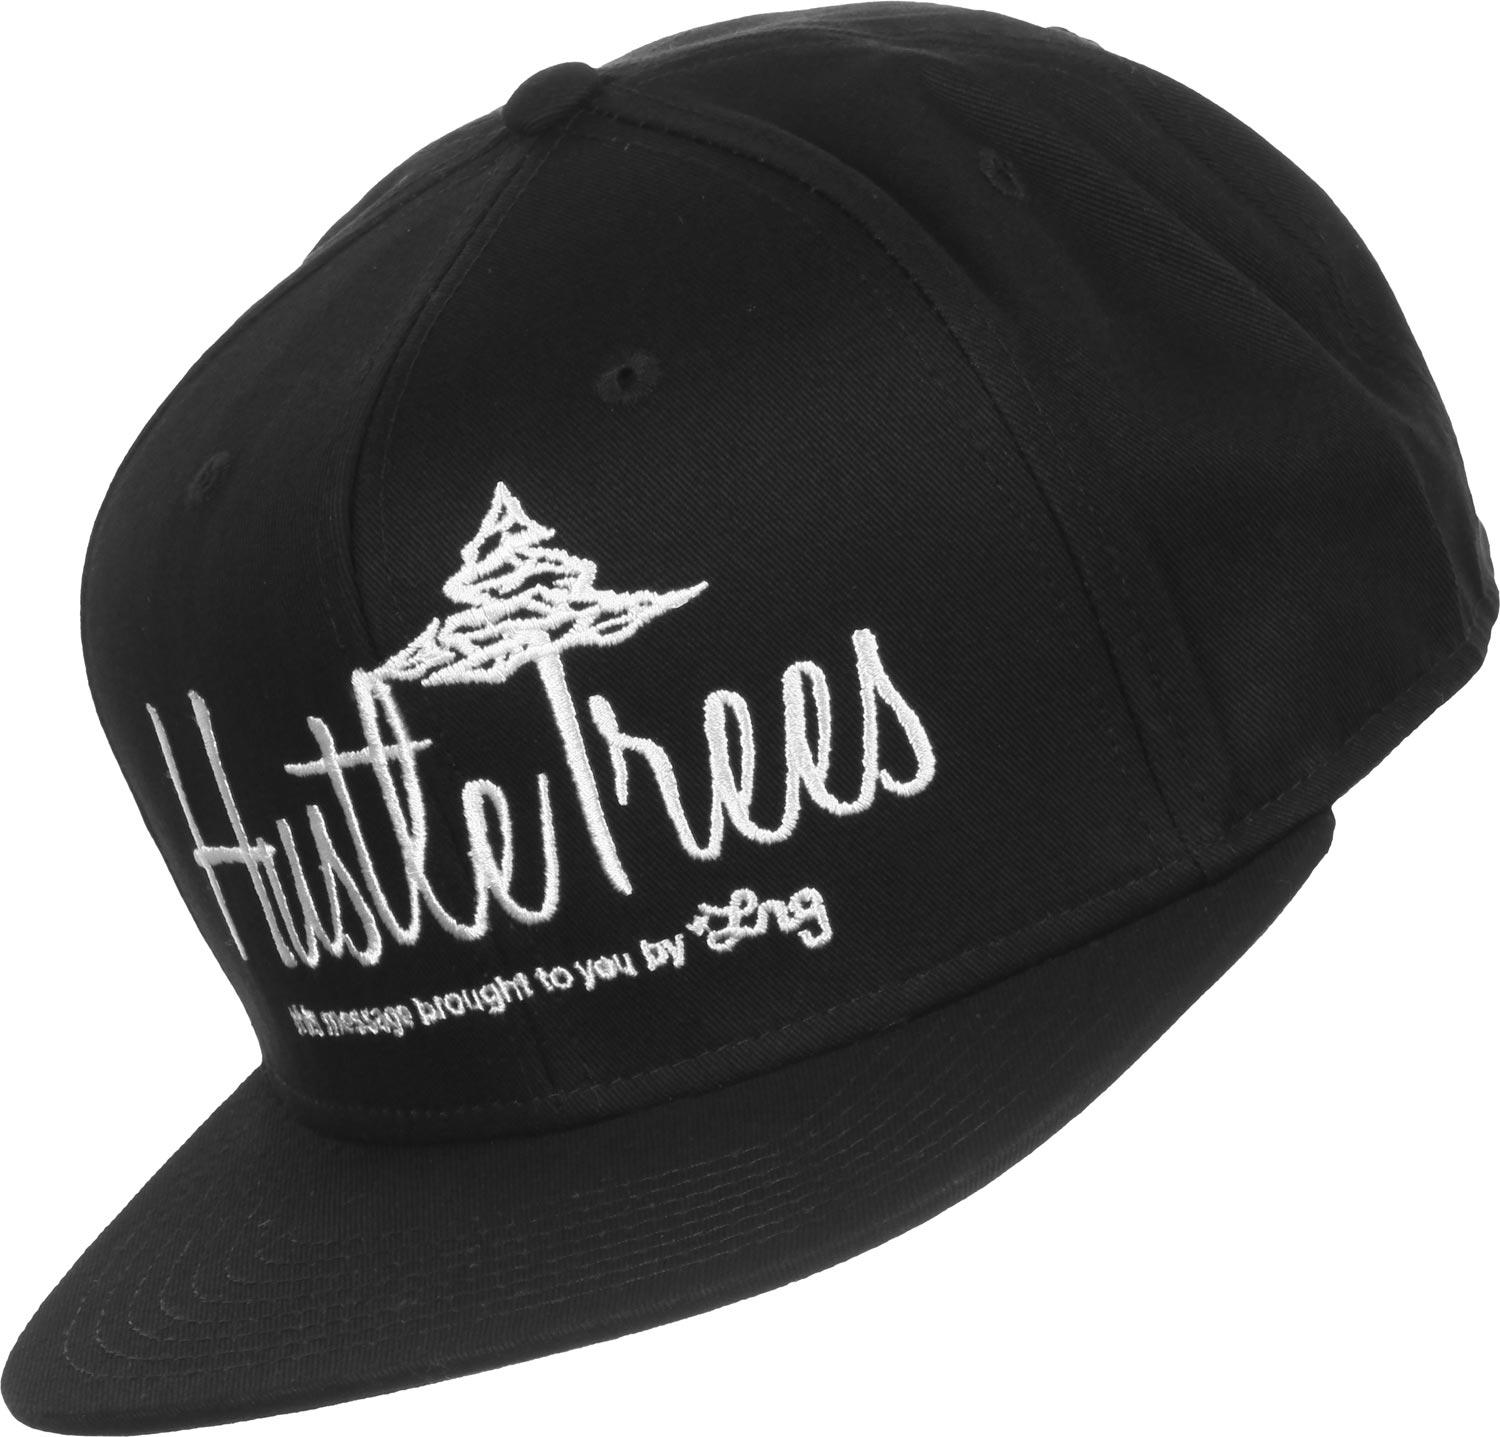 LRG Hustle Trees Logo - LRG Hustle Trees cap black